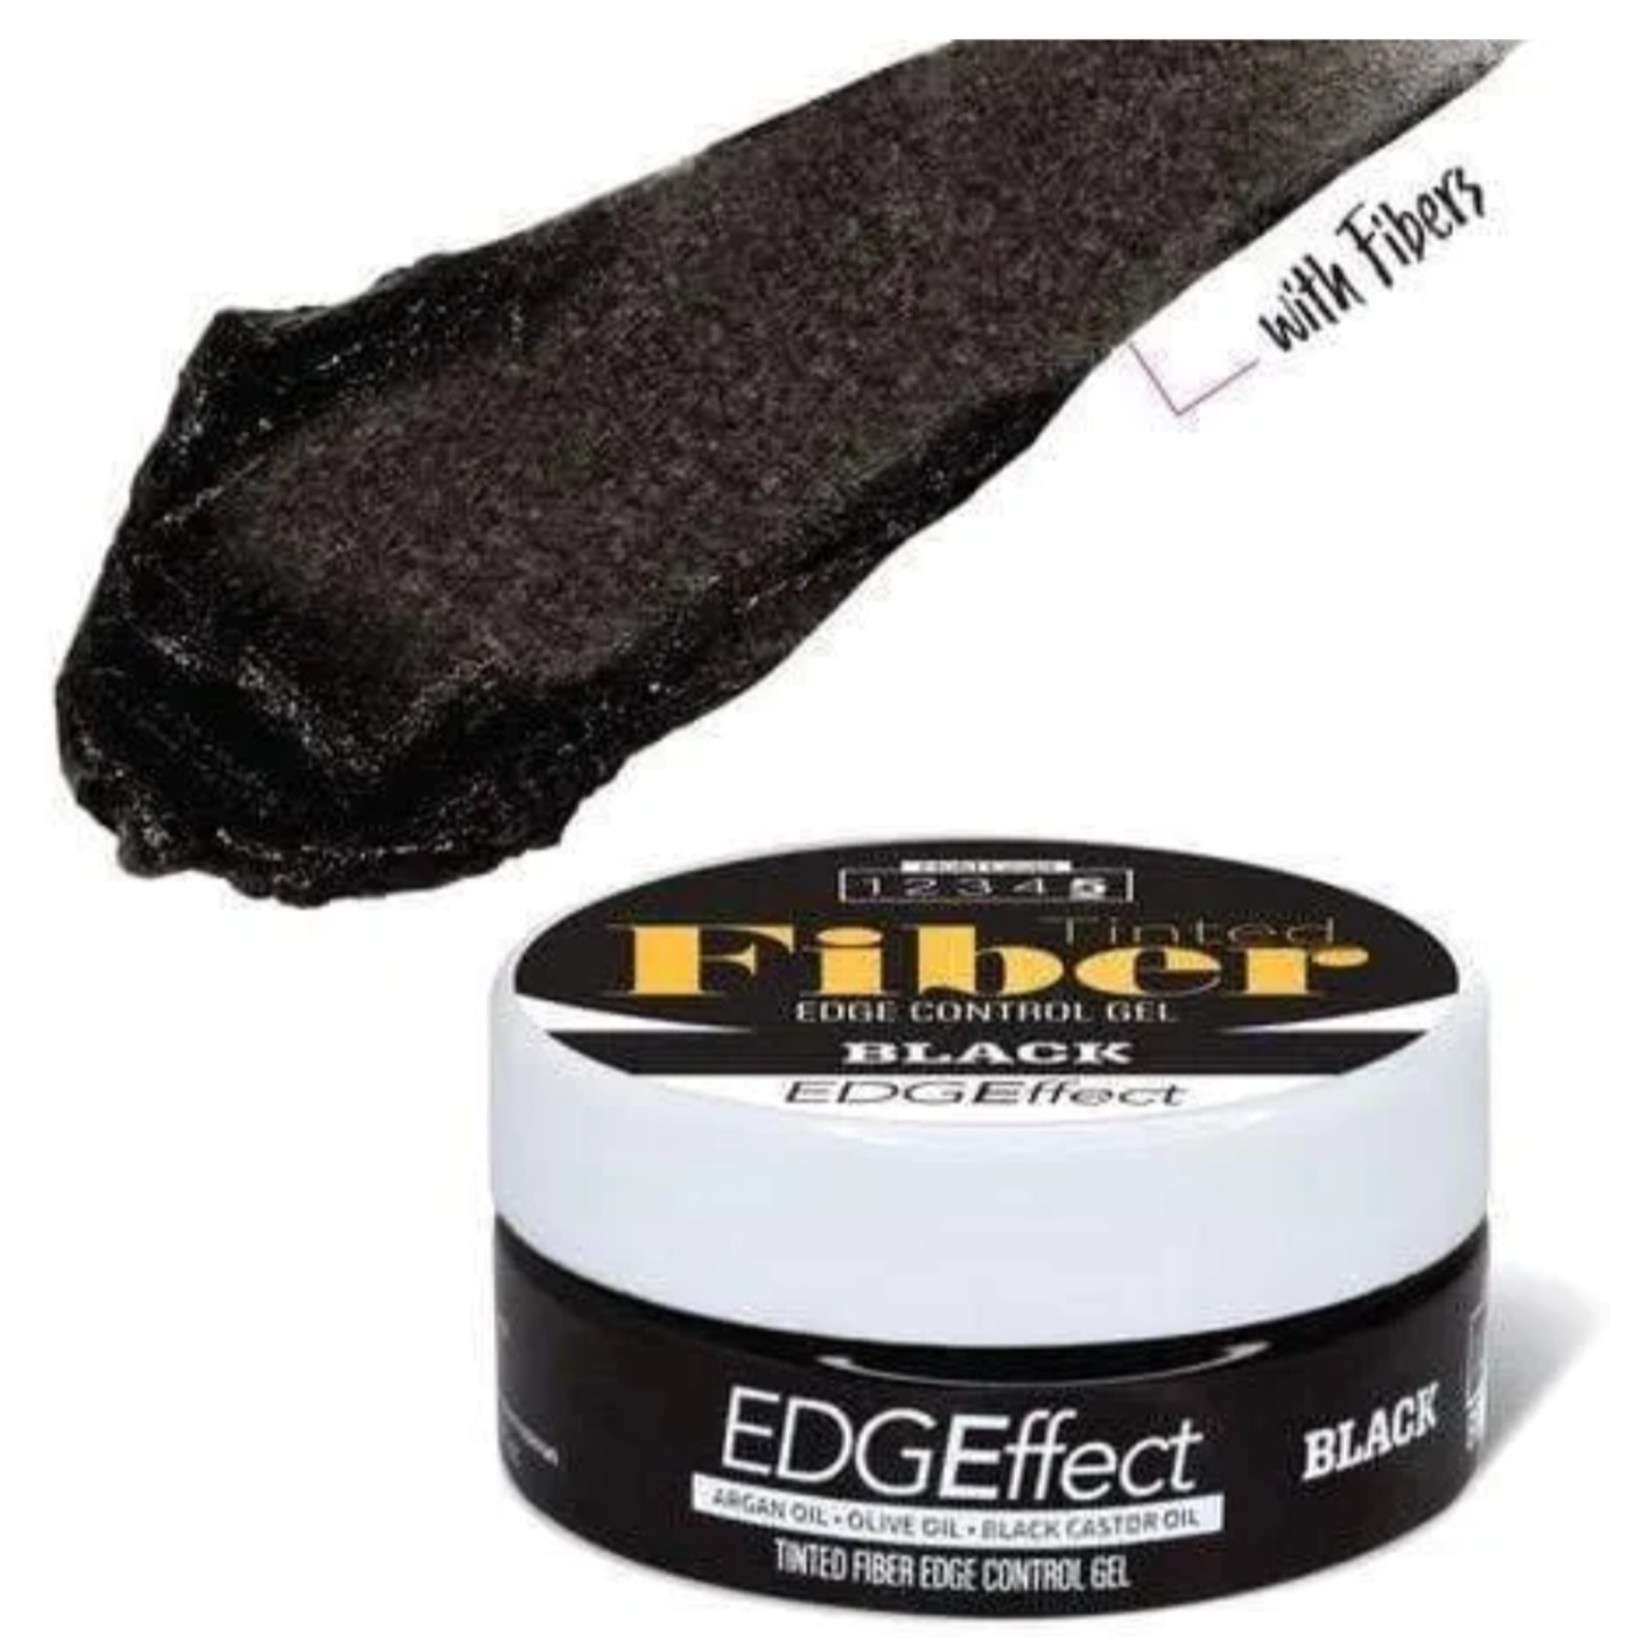 Edge Effect Tinted Fiber Black